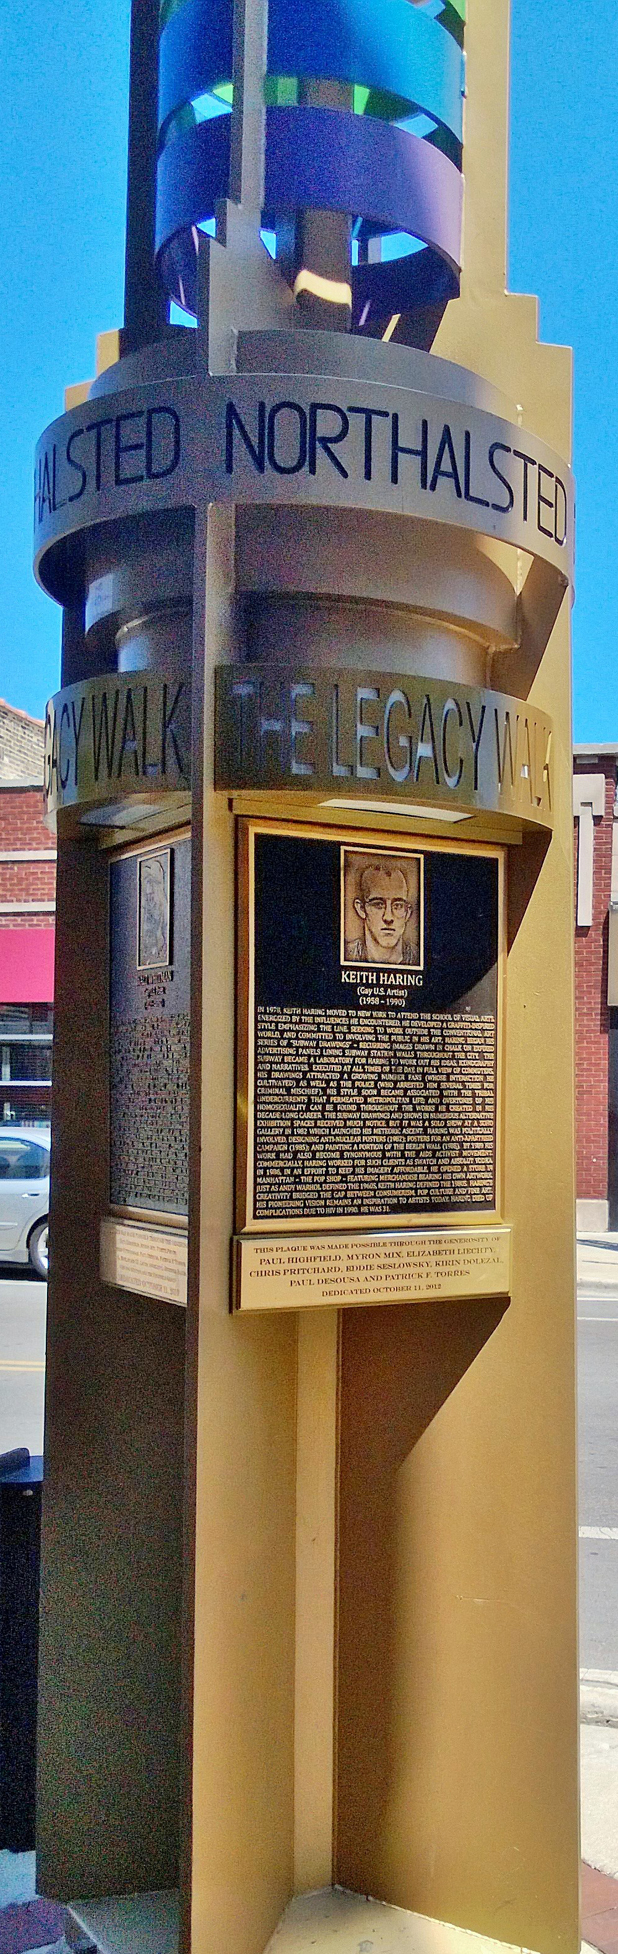 Legacy Walk Pylon with Bronze Memorials